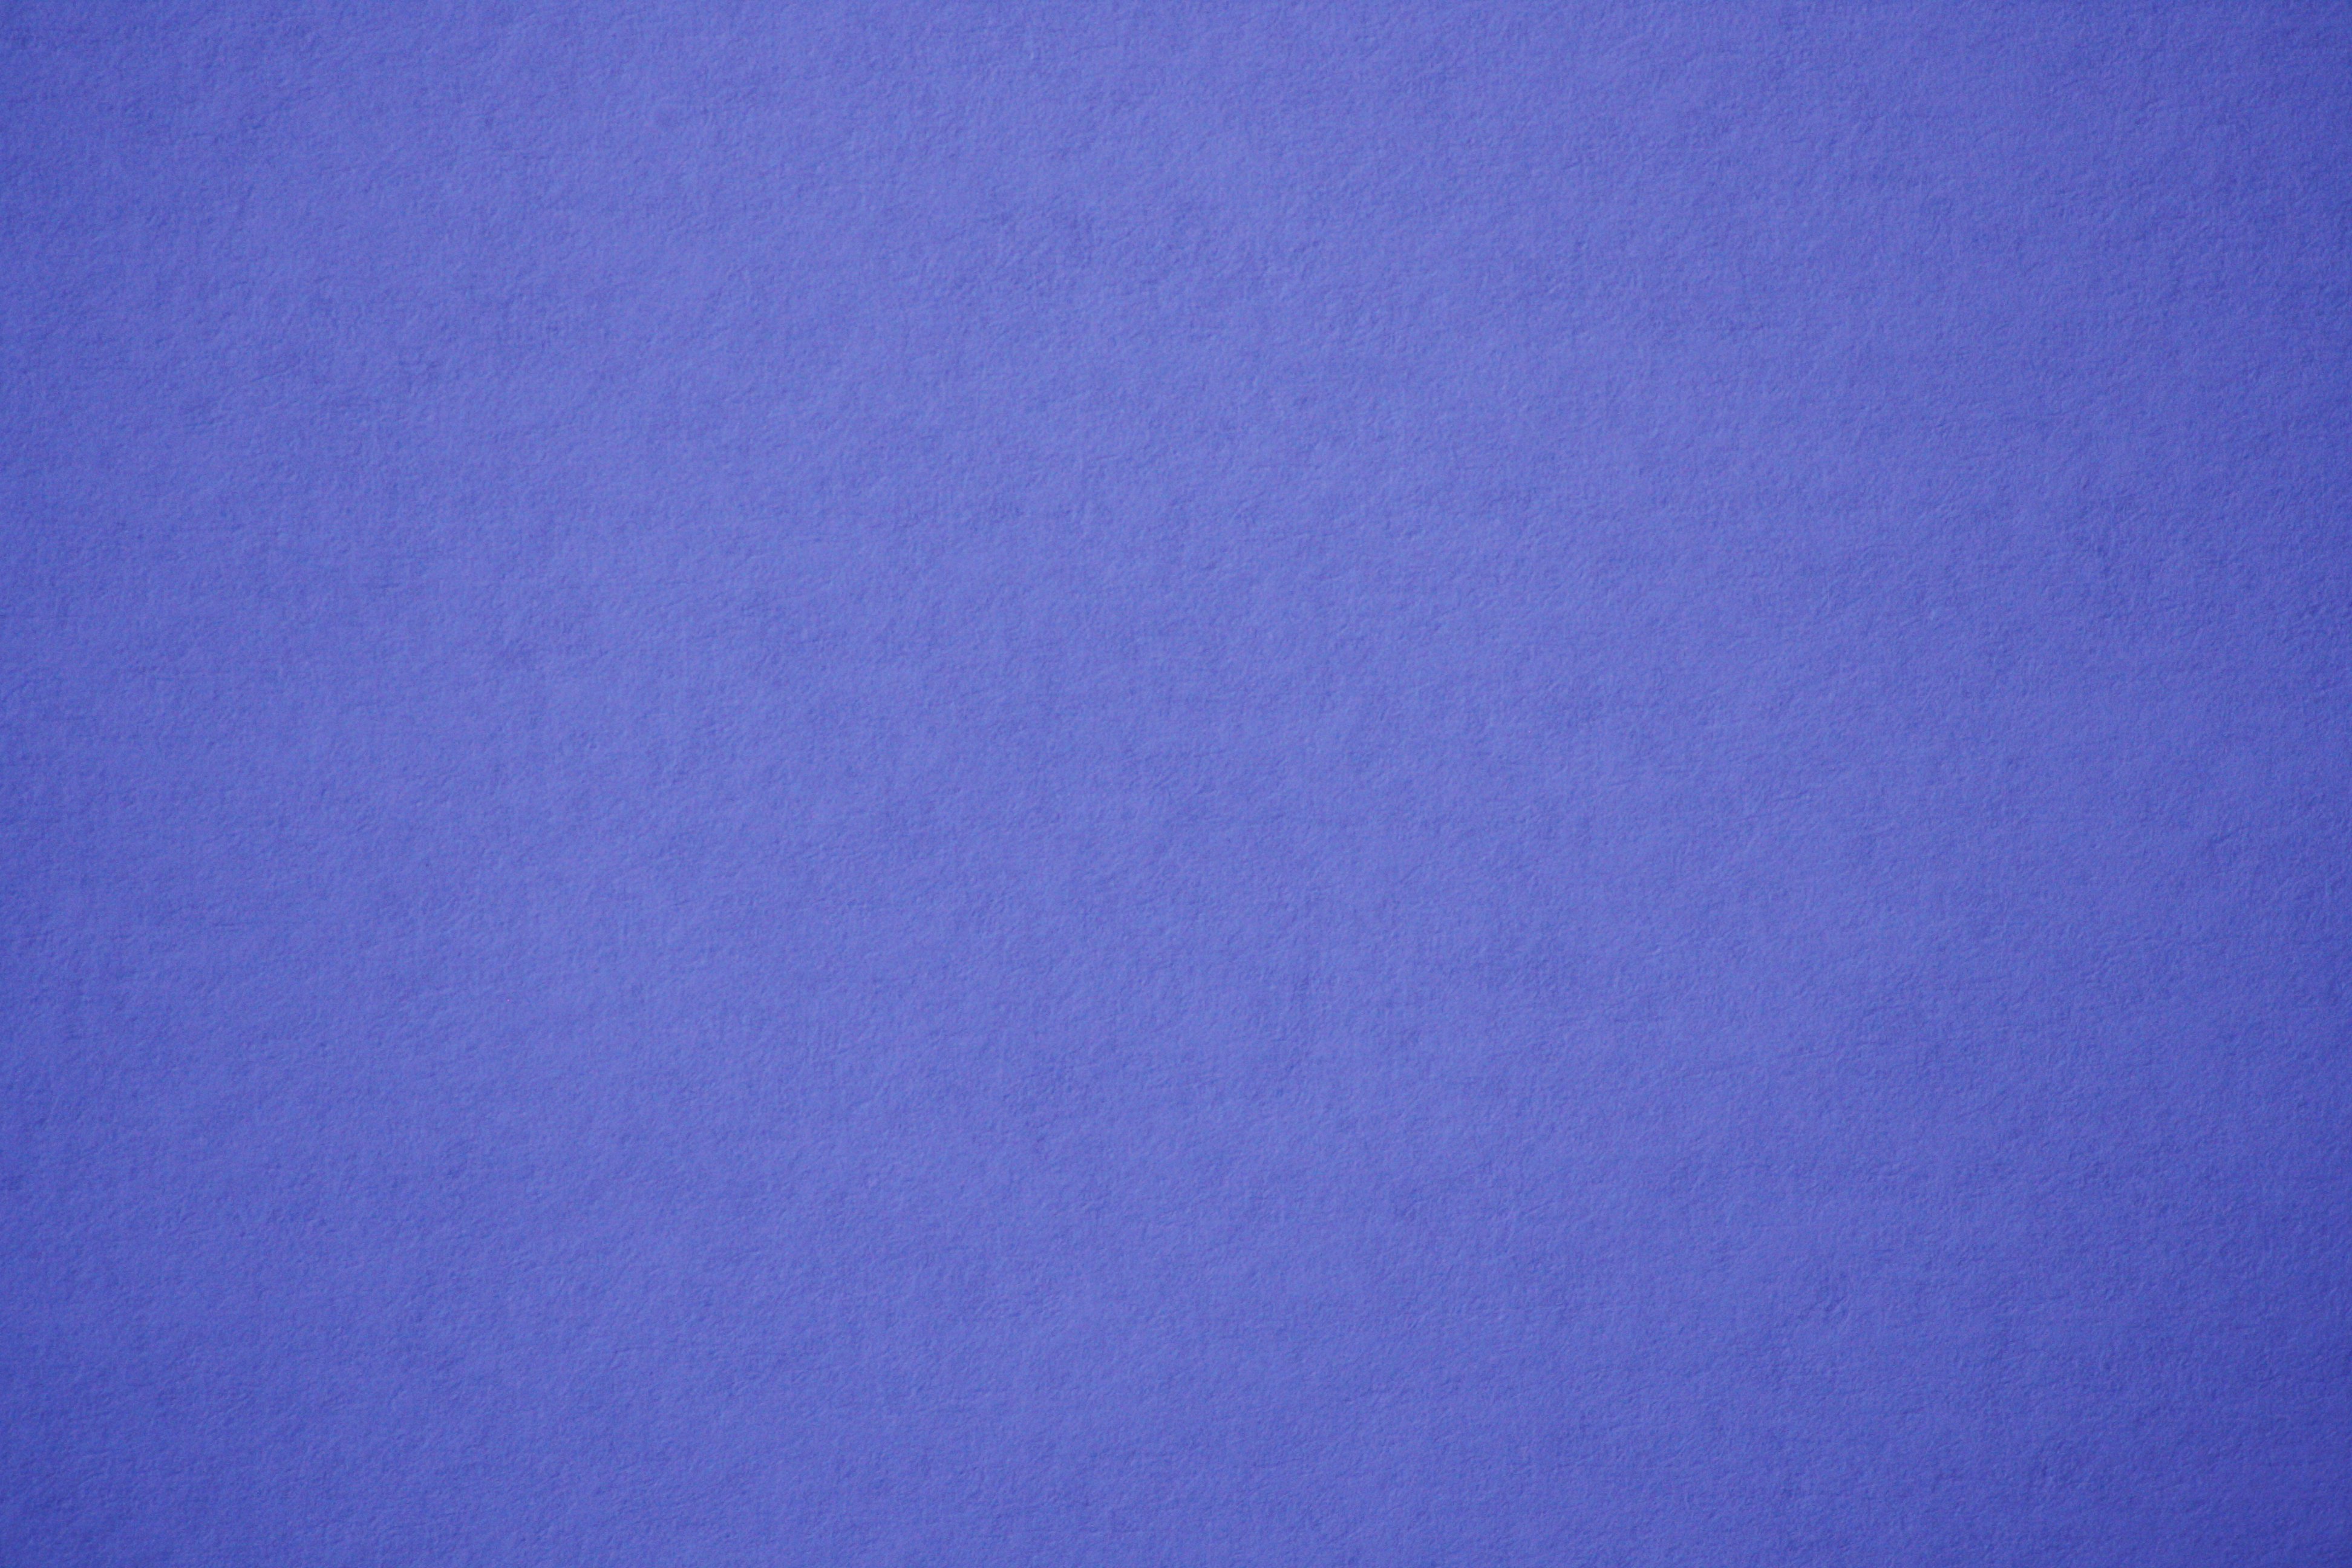 Periwinkle Blue Paper Texture Picture | Free Photograph | Photos ...